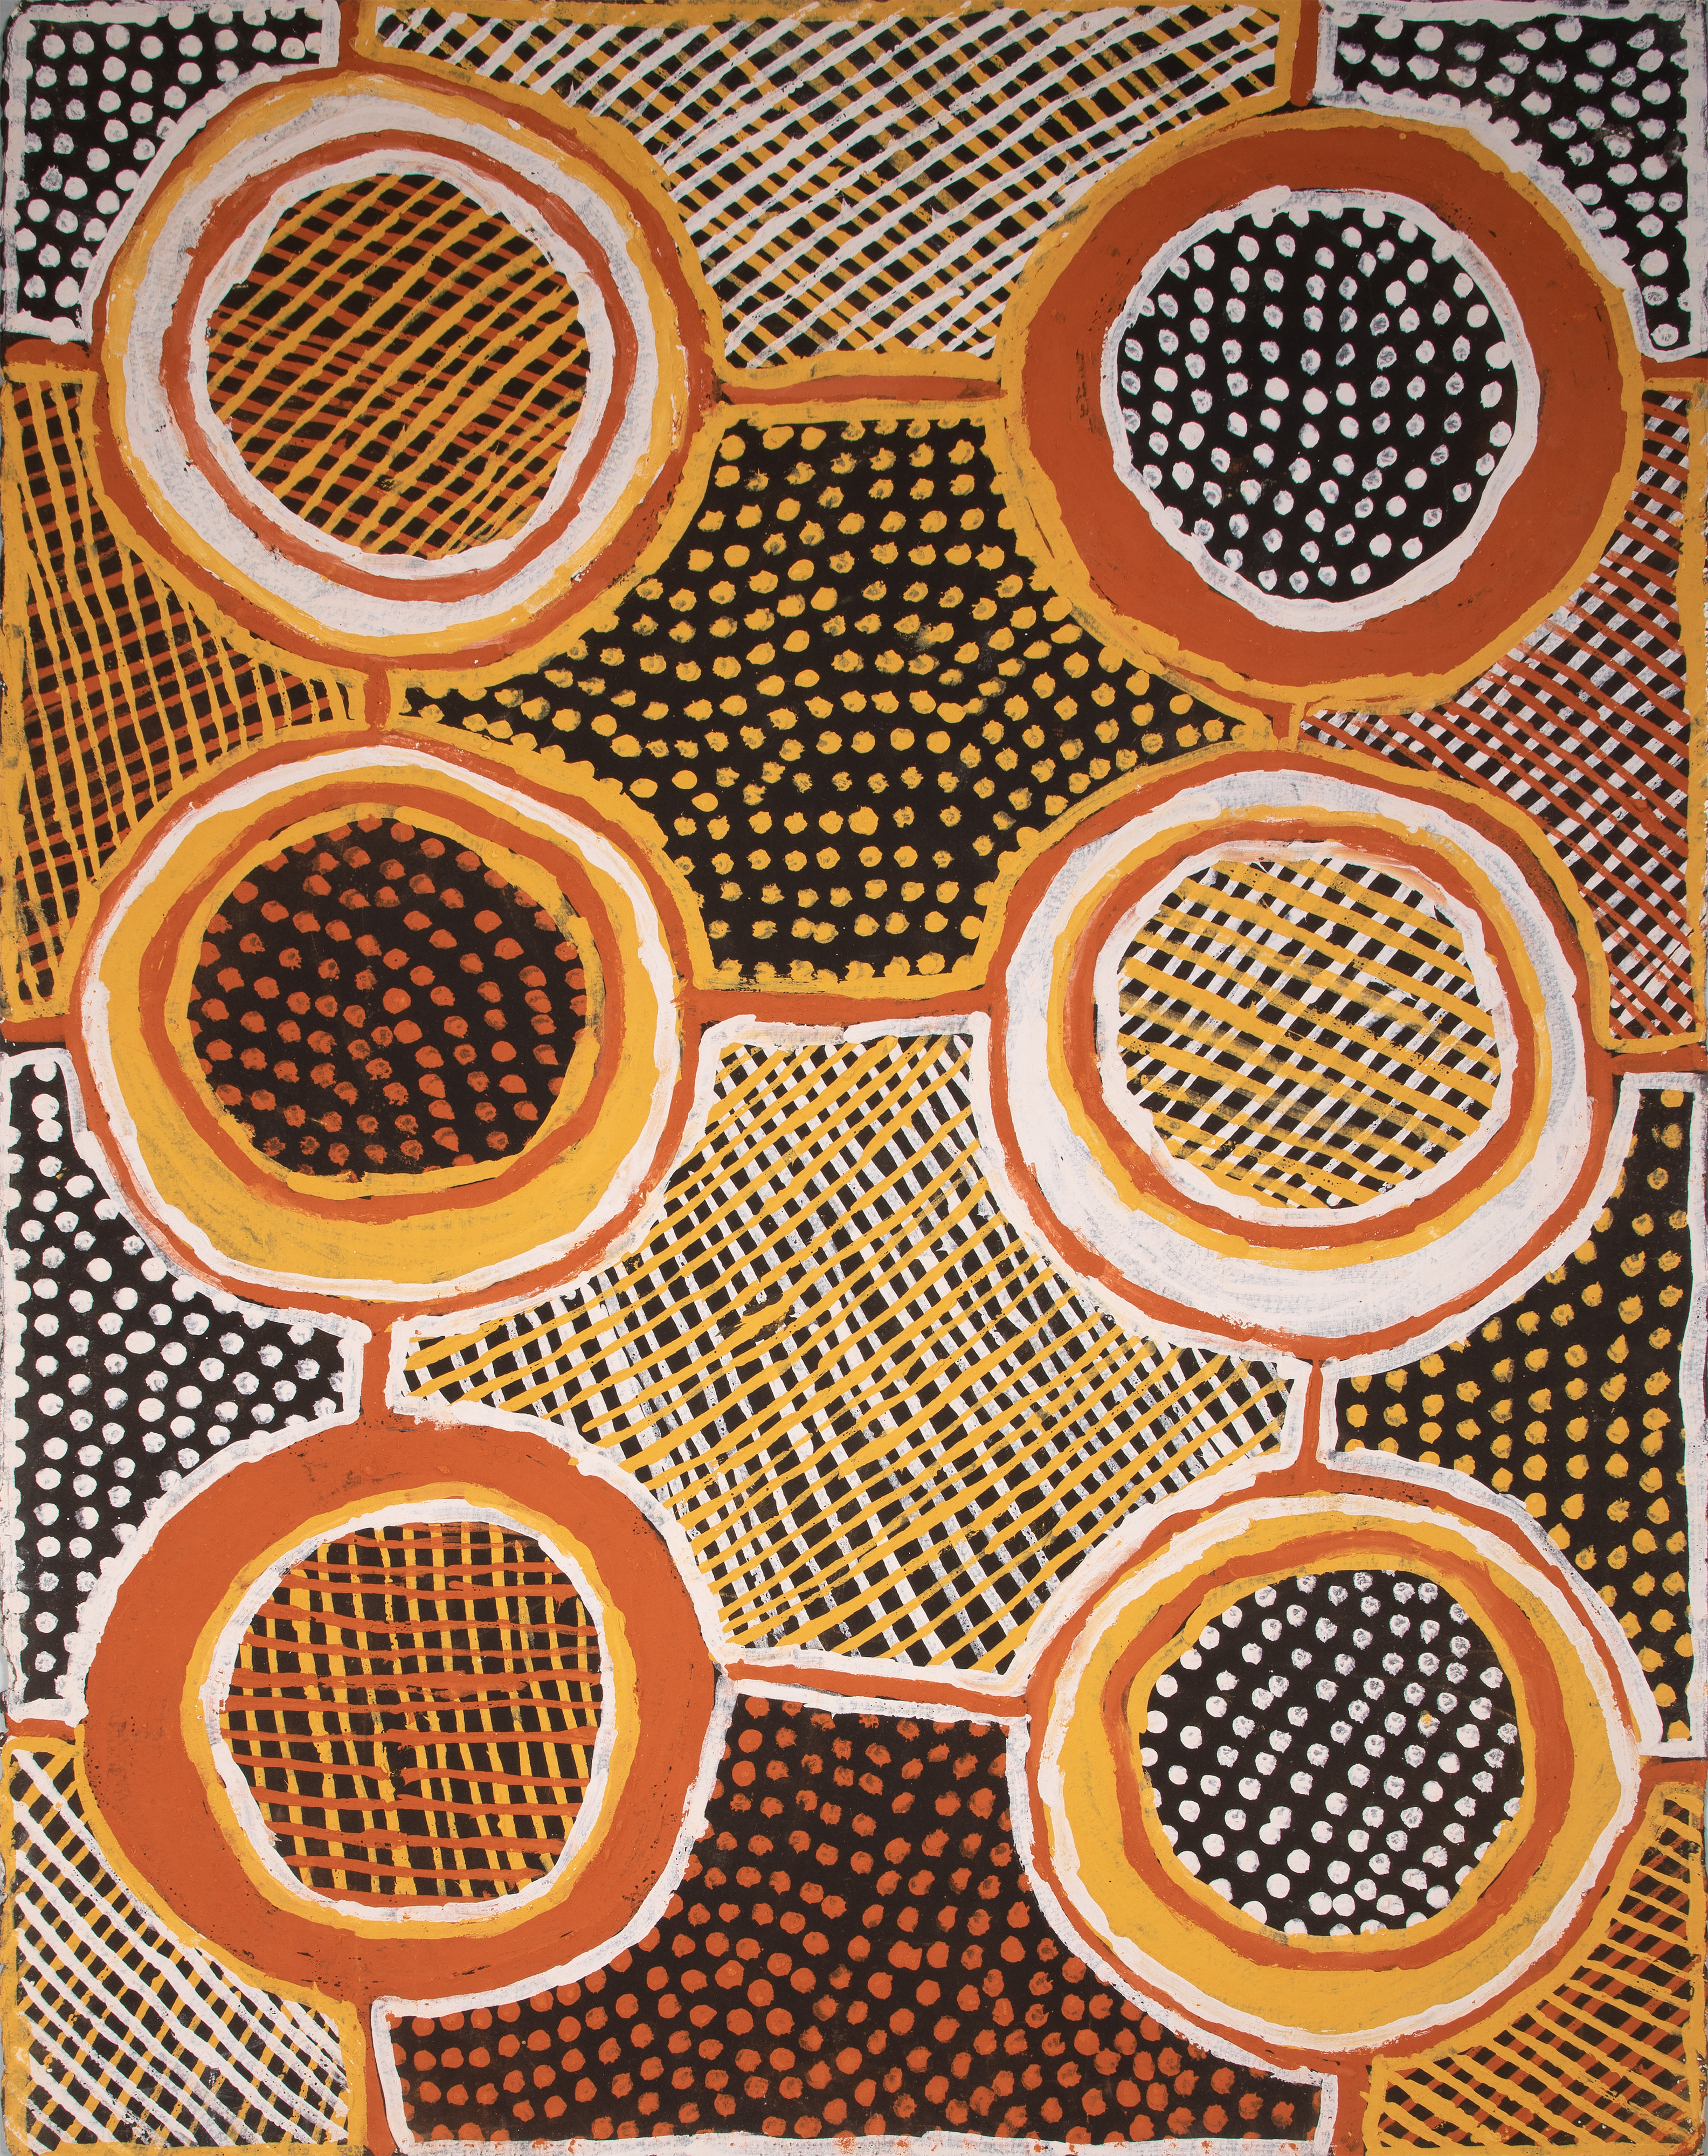 JEAN BAPTISTE APUATIMI, Untitled (Kulama), 2002, Natural pigments on paper. Gift of Richard Klingler and Jane Slatter, 2021 2021.0011.013.